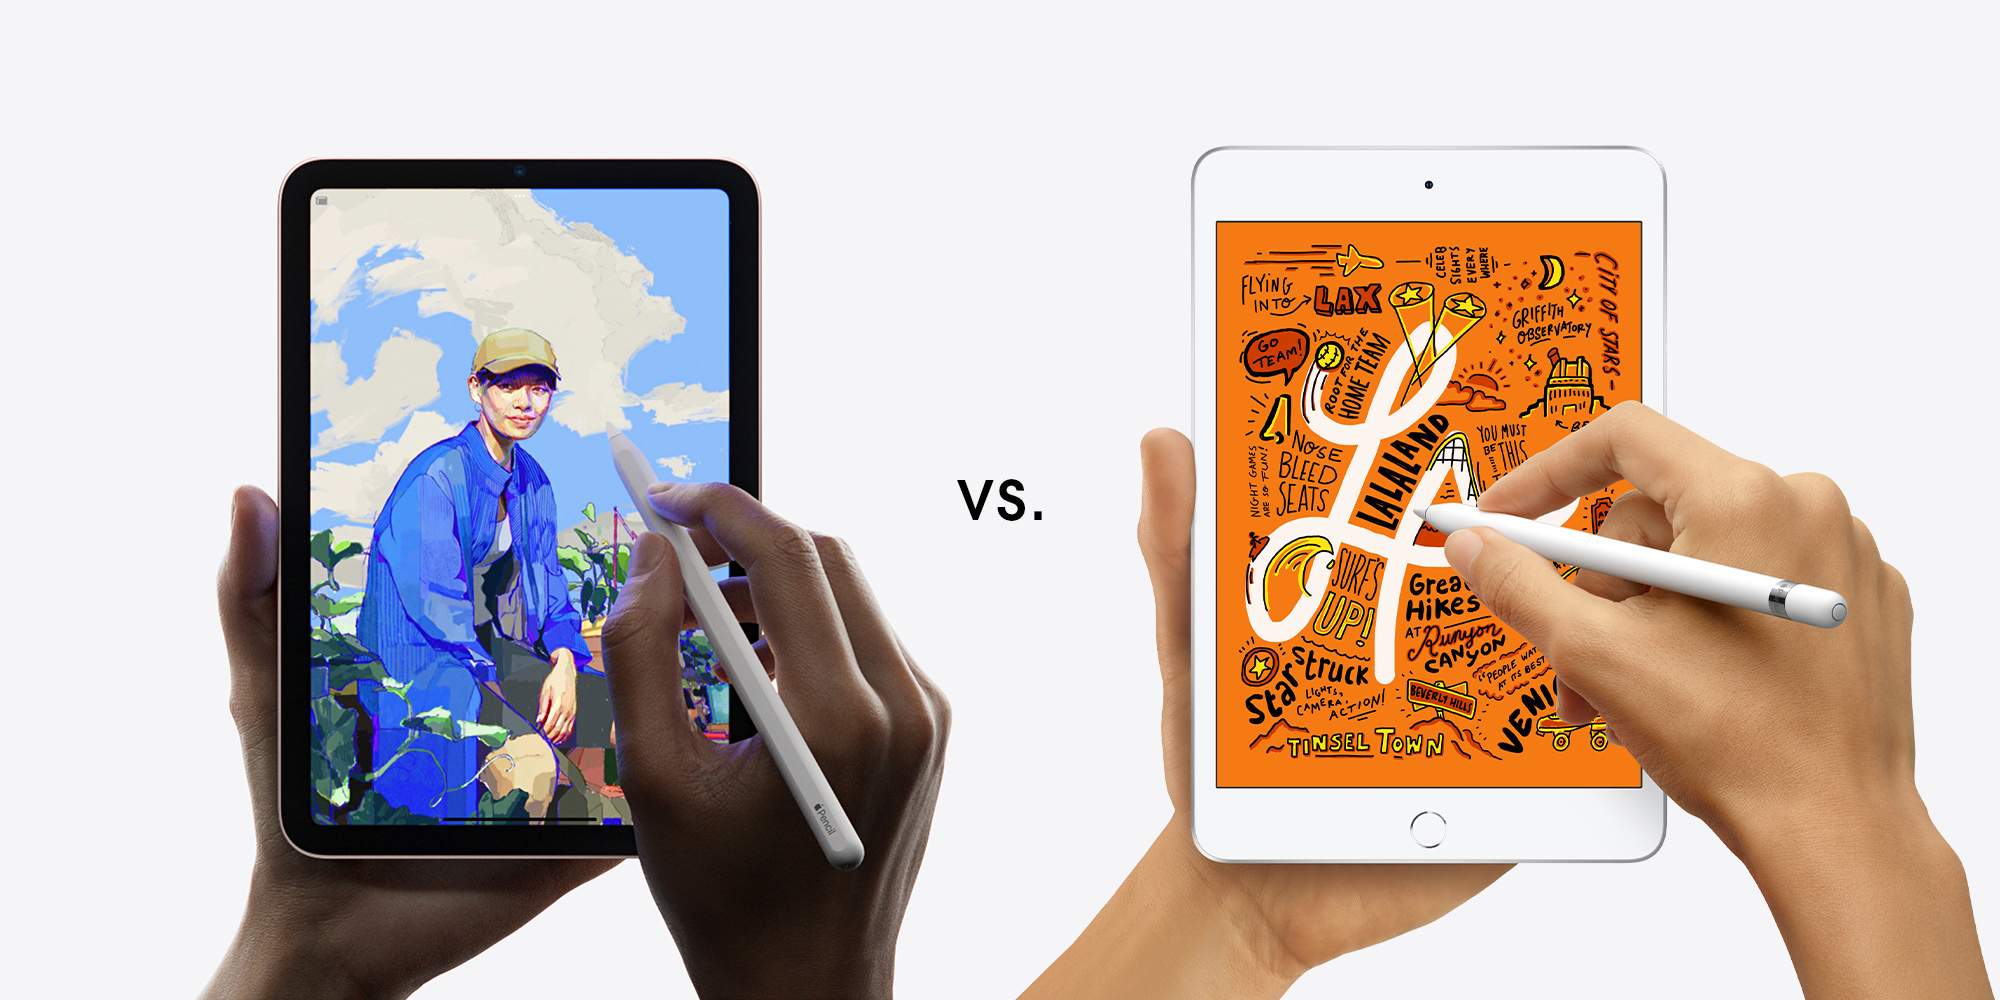 Comparison: New 10.9-inch iPad vs. iPad Air